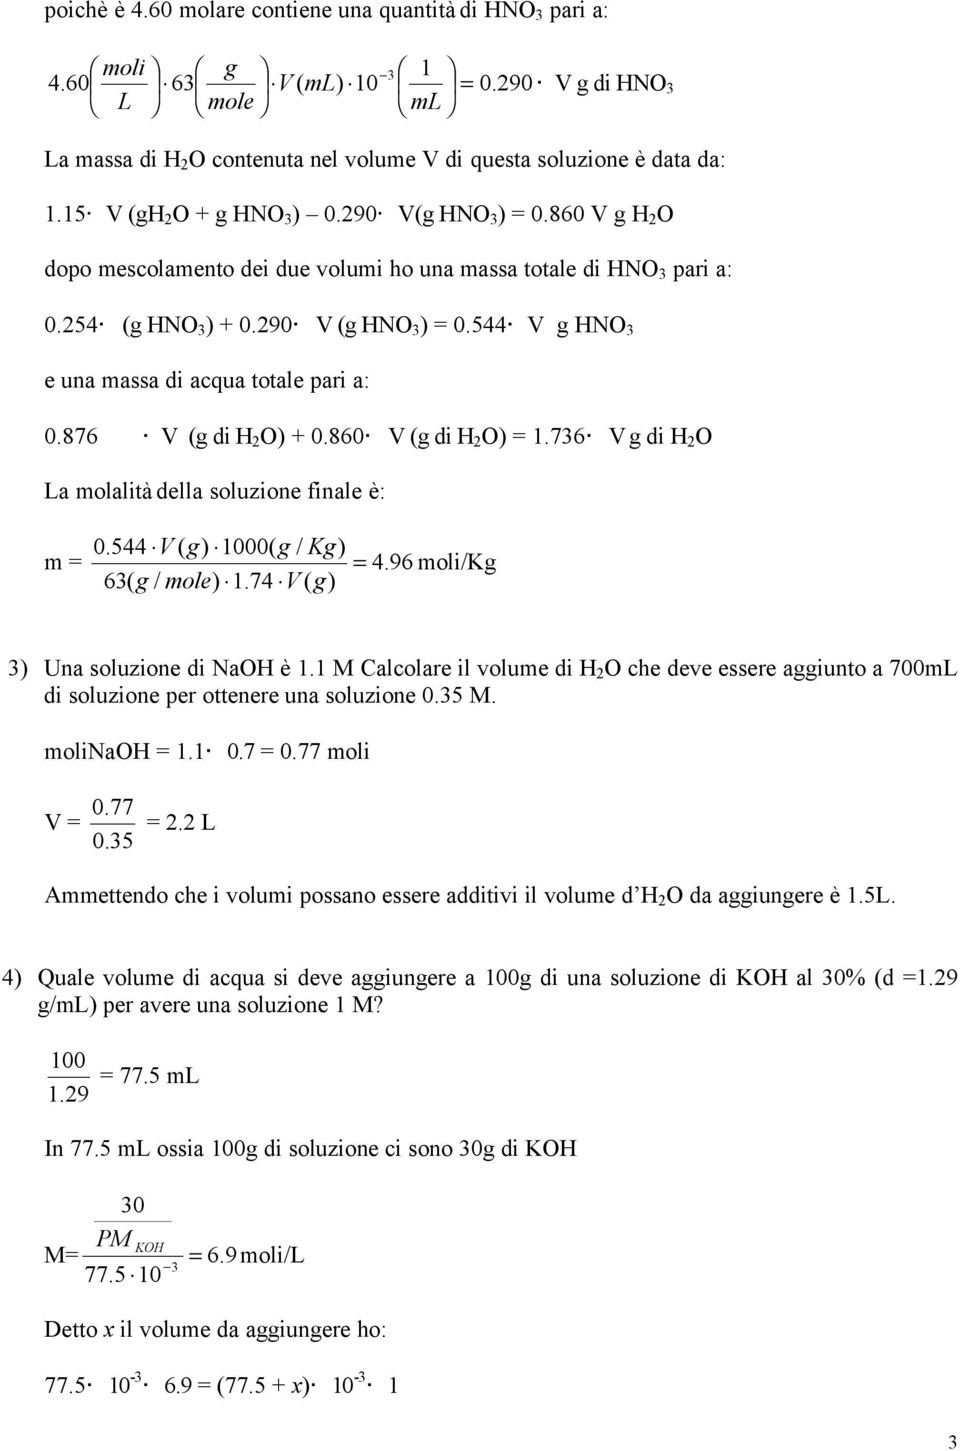 544 V g HNO 3 e una massa di acqua totale pari a: 0.876 V (g di H O) + 0.860 V (g di H O) = 1.736 V g di H O La molalità della soluzione finale è: 0.544 V ( g) 1000( g / Kg) m = = 4.